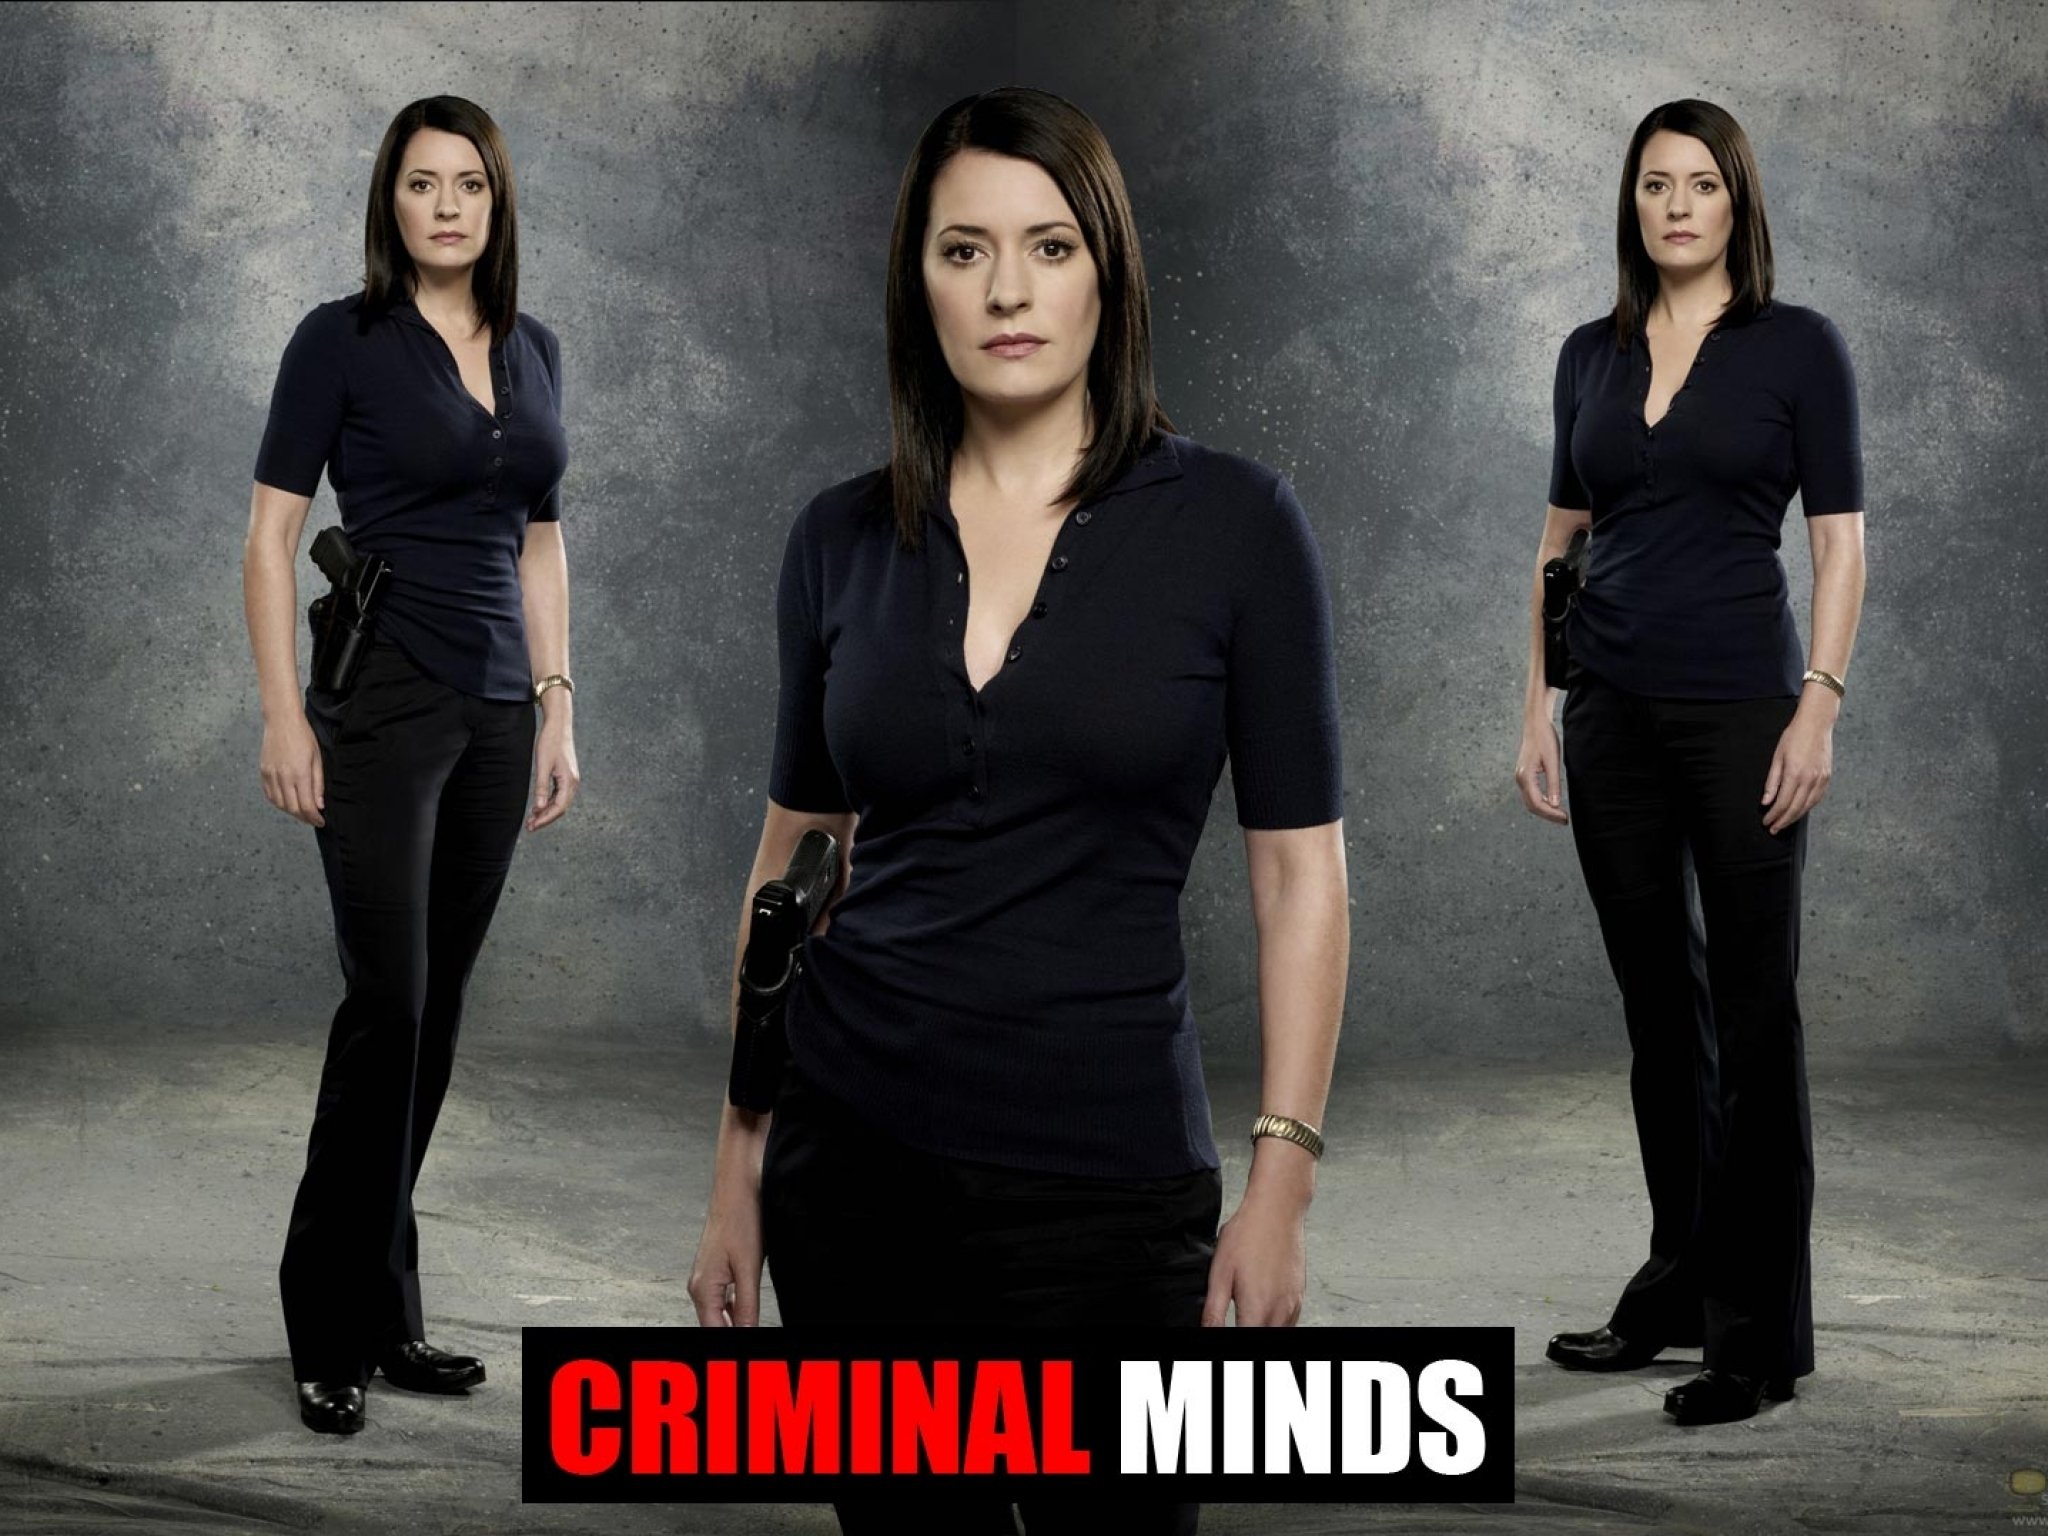 Criminal minds crime drama mystery procedural wallpaper x